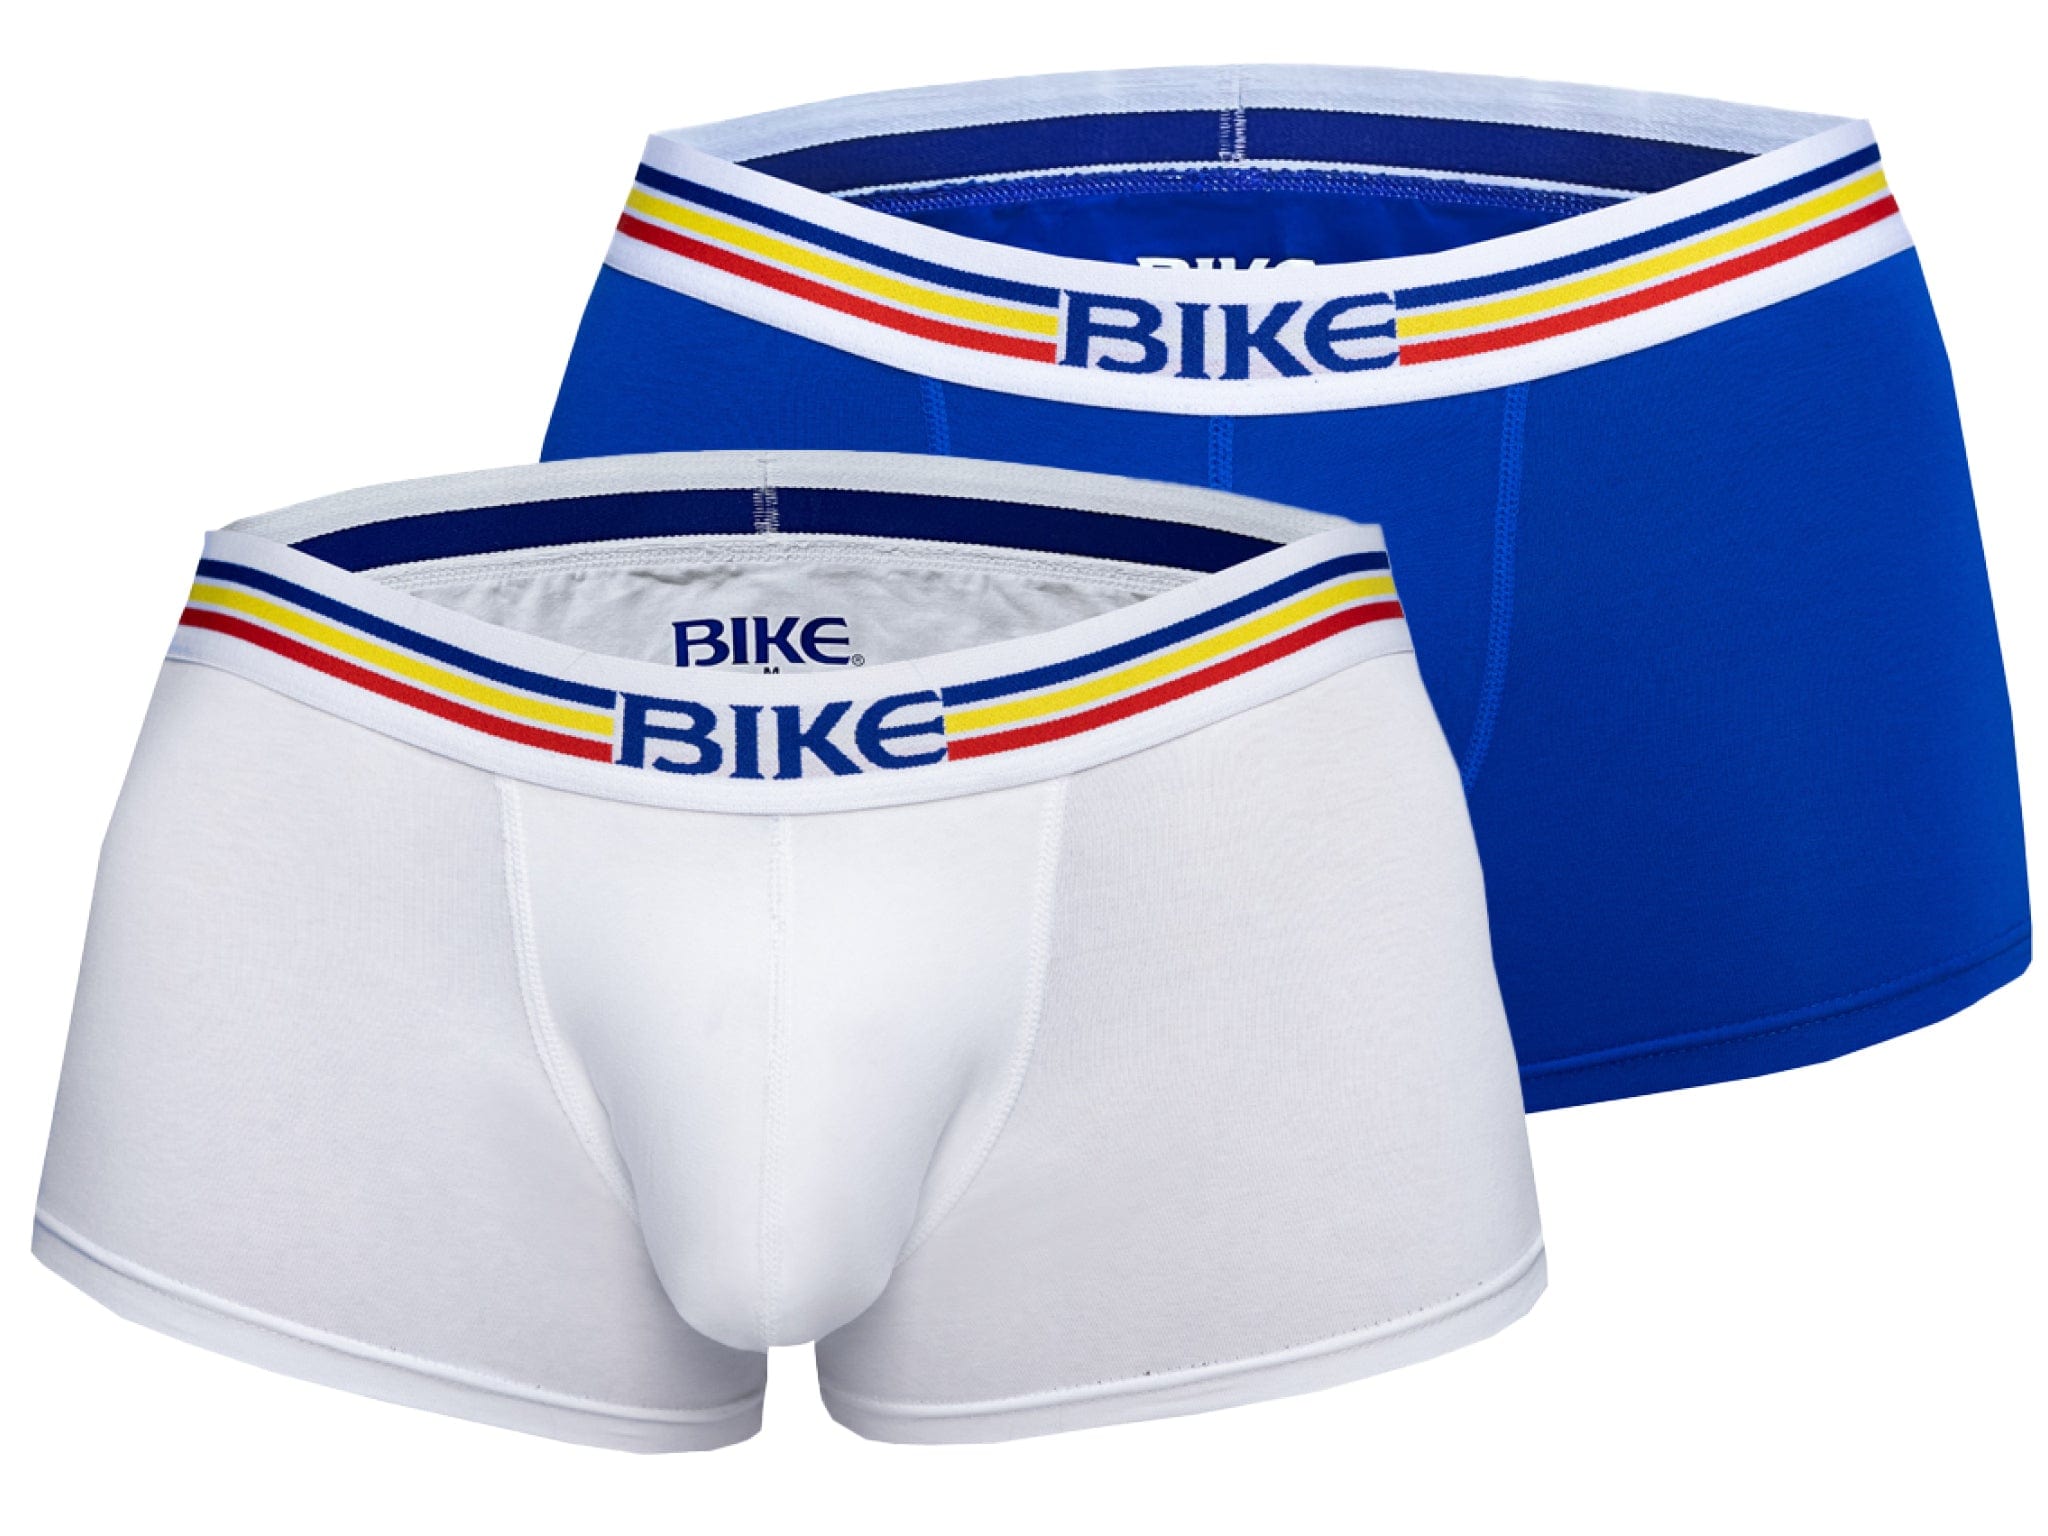 2 Pack Men's Jock Brief Underwear in White and Royal - BIKE® Athletic